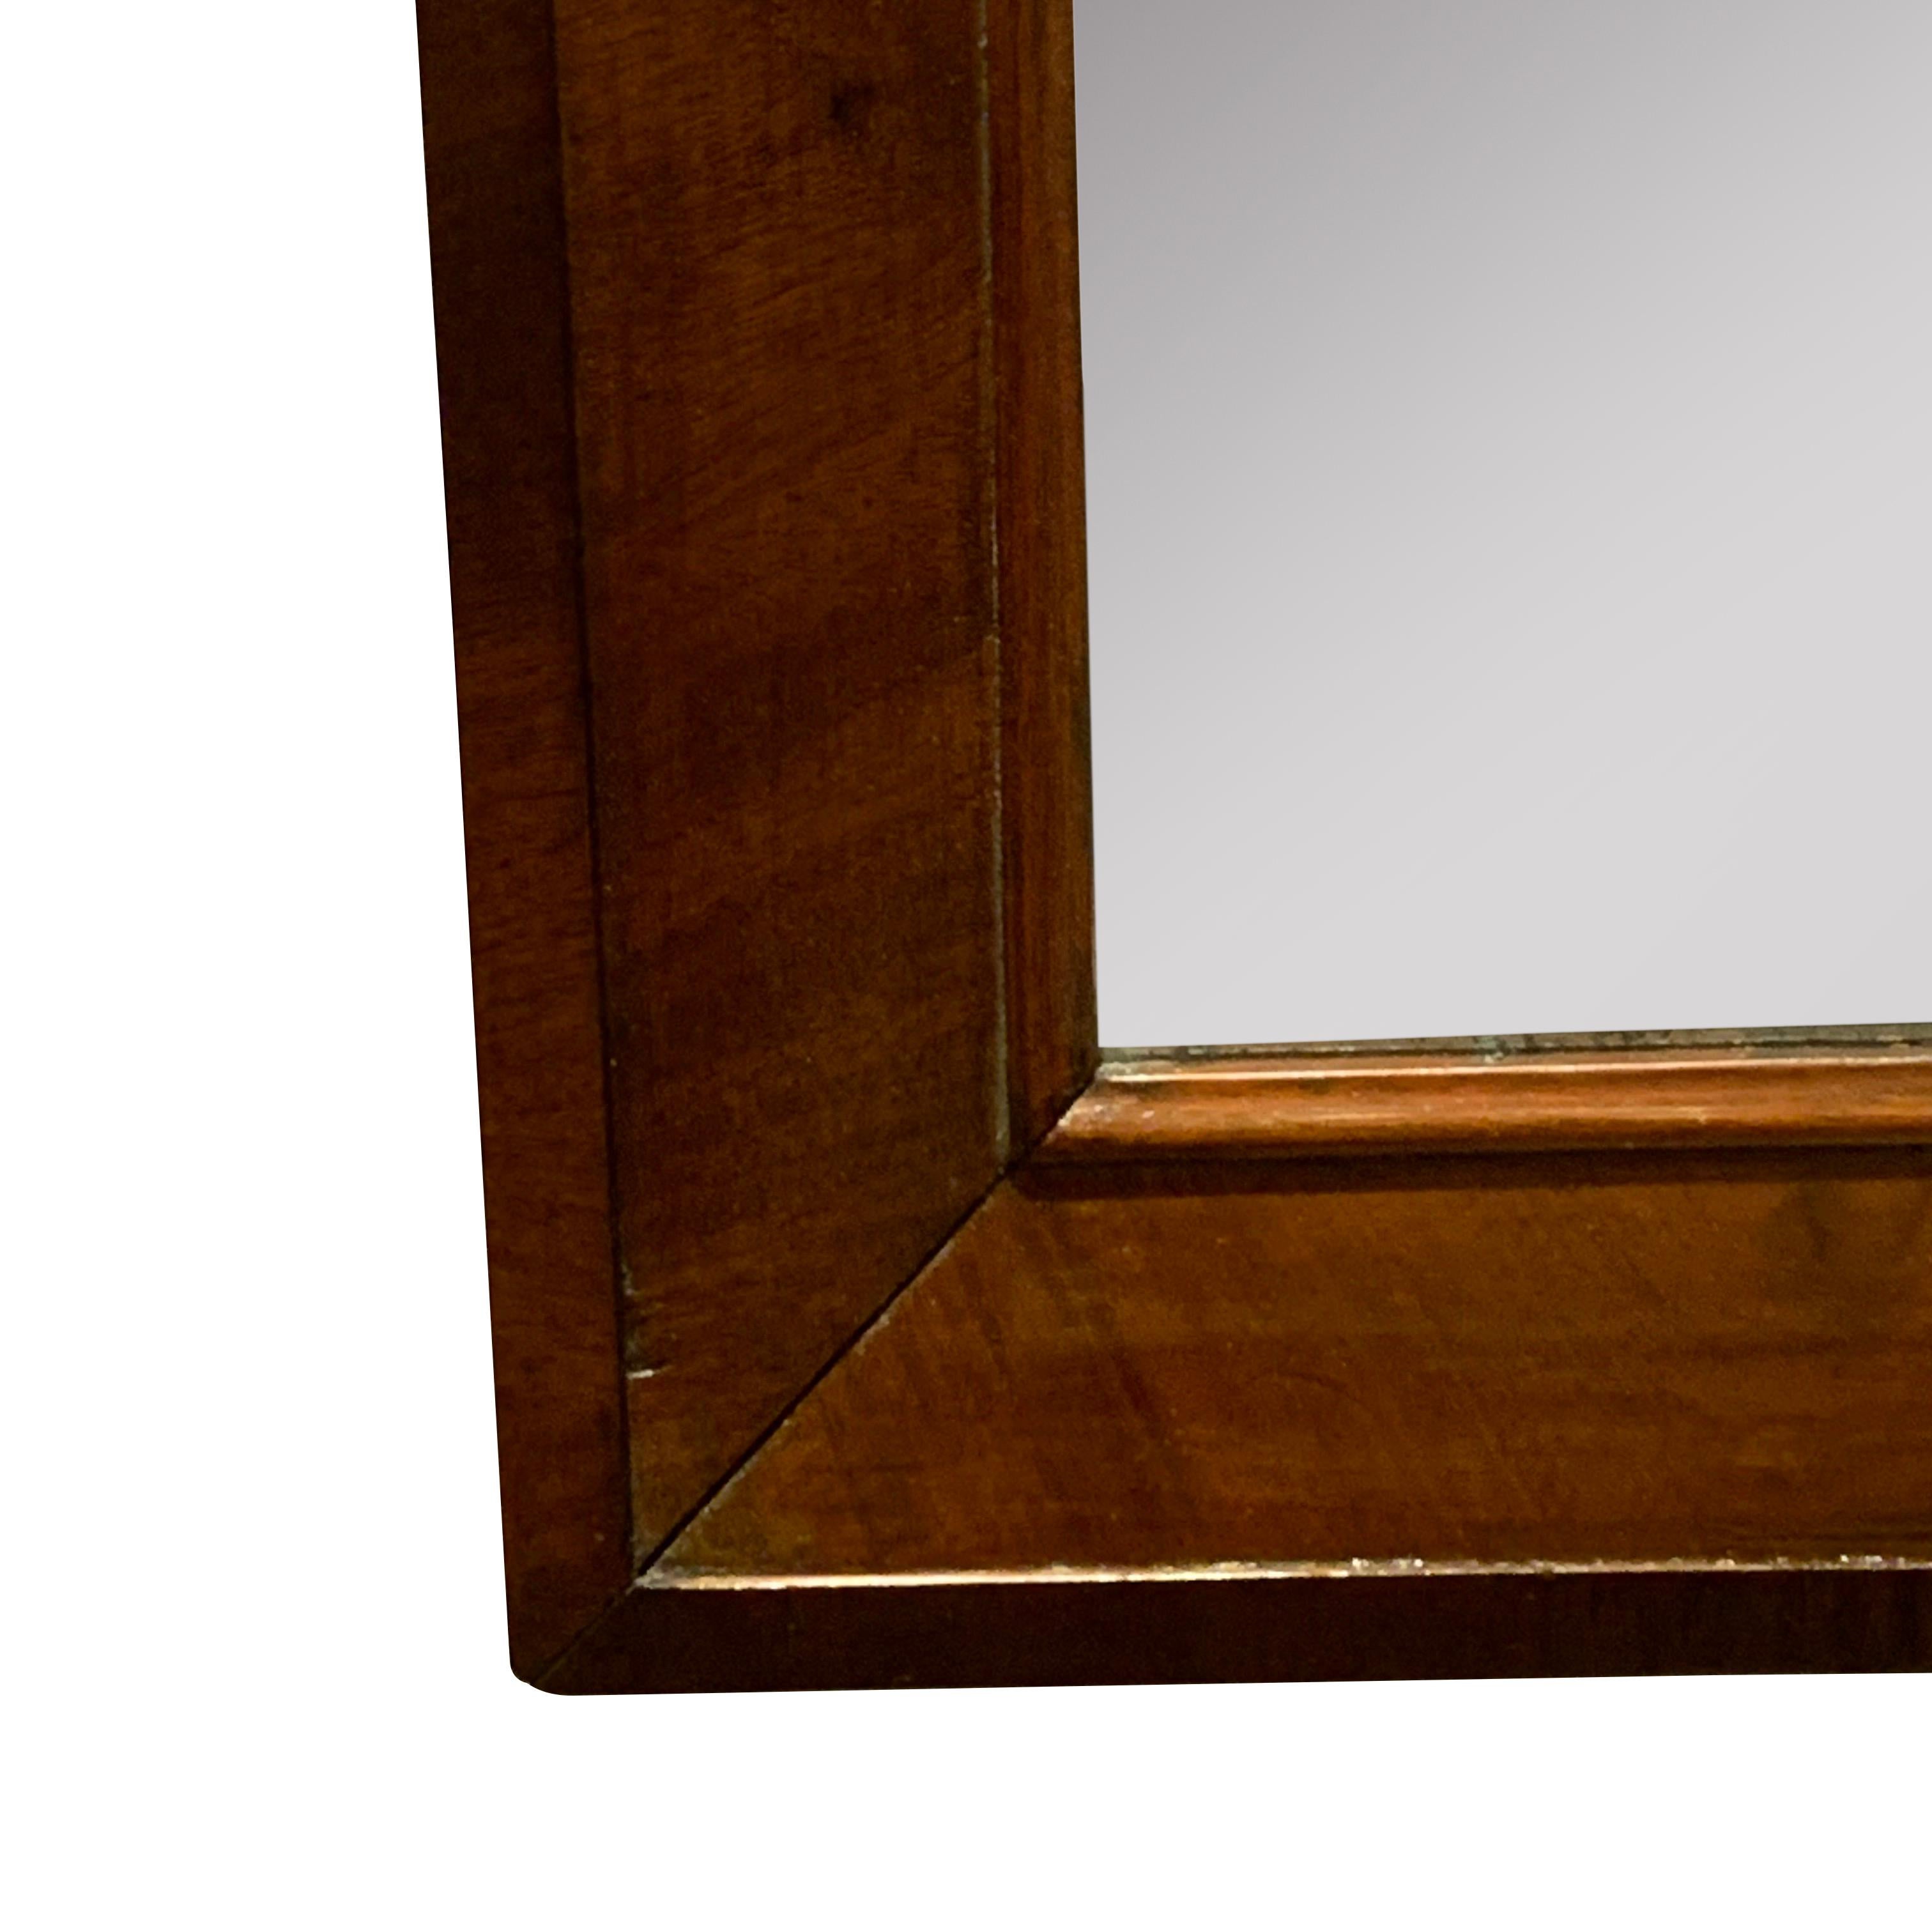 19th century French mahogany wood framed mirror
Polished veneer
Original mirror showing natural age/patina.